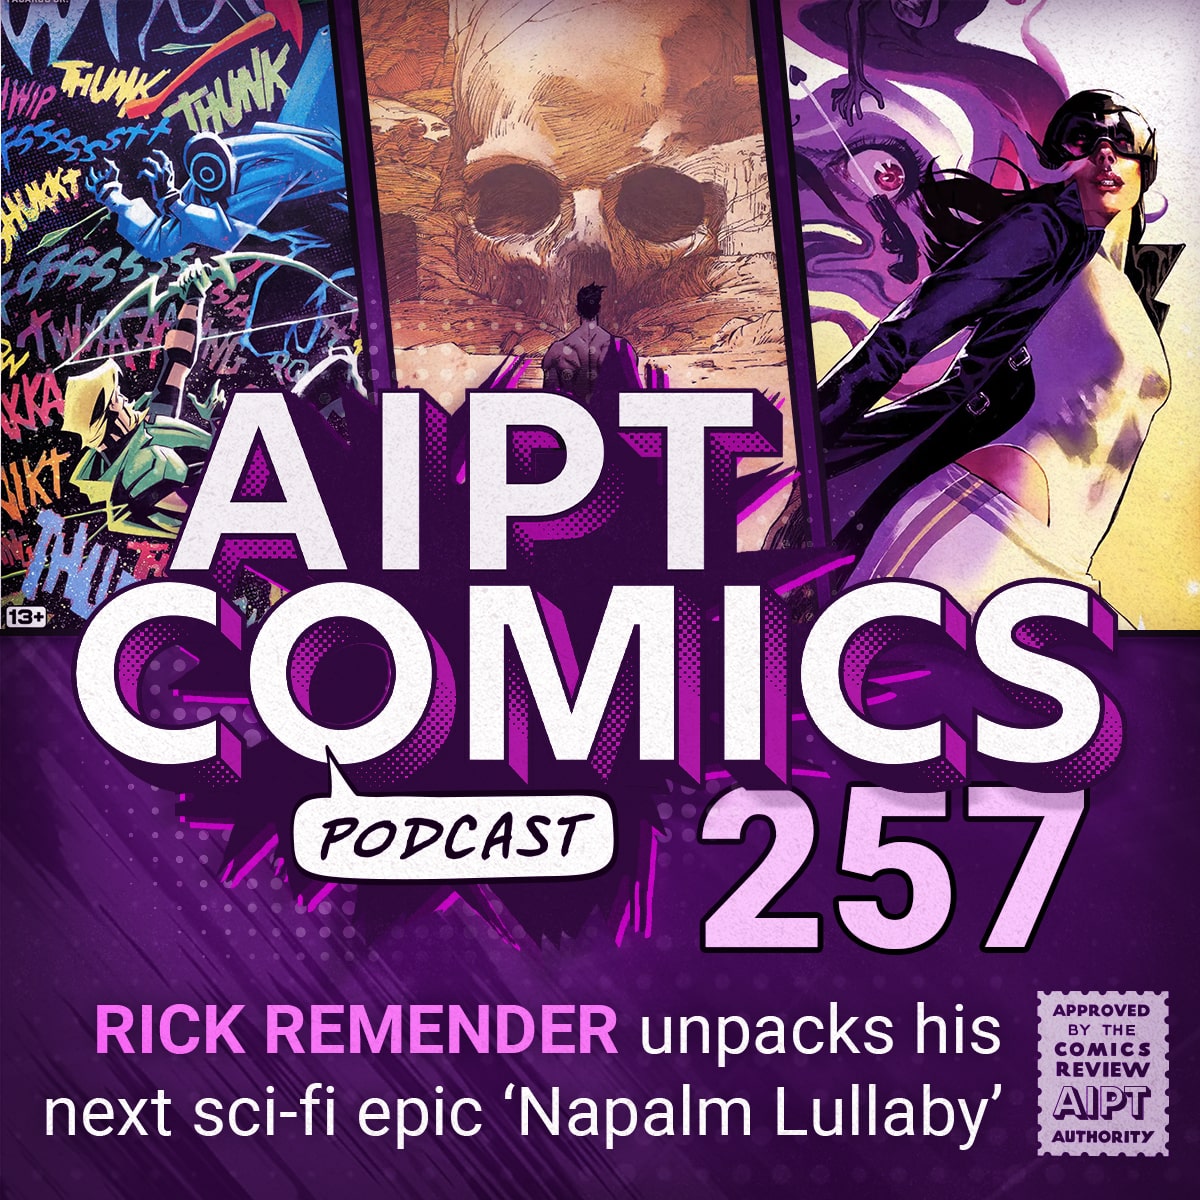 AIPT Comics Podcast Episode 257: Rick Remender unpacks his next sci-fi epic ‘Napalm Lullaby’